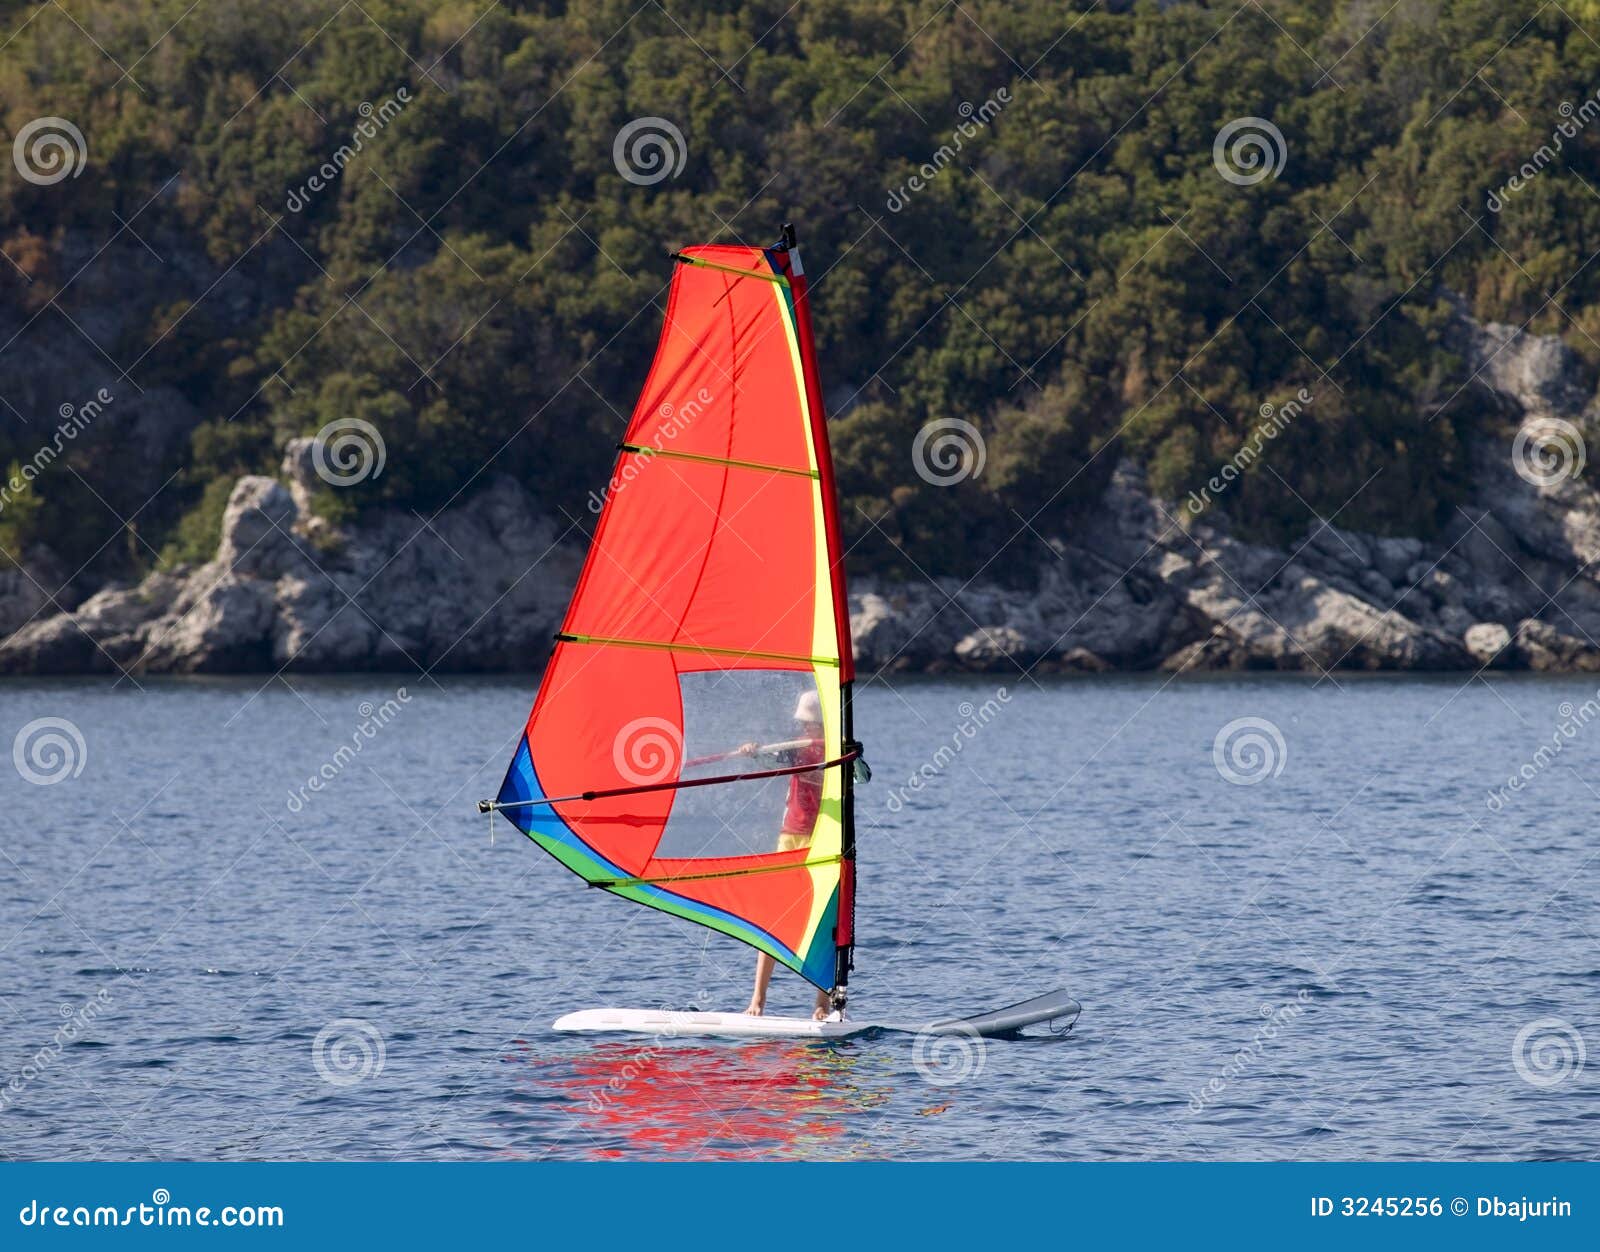 Sailboard stock photo. Image of sail, wave, slow, alone ...